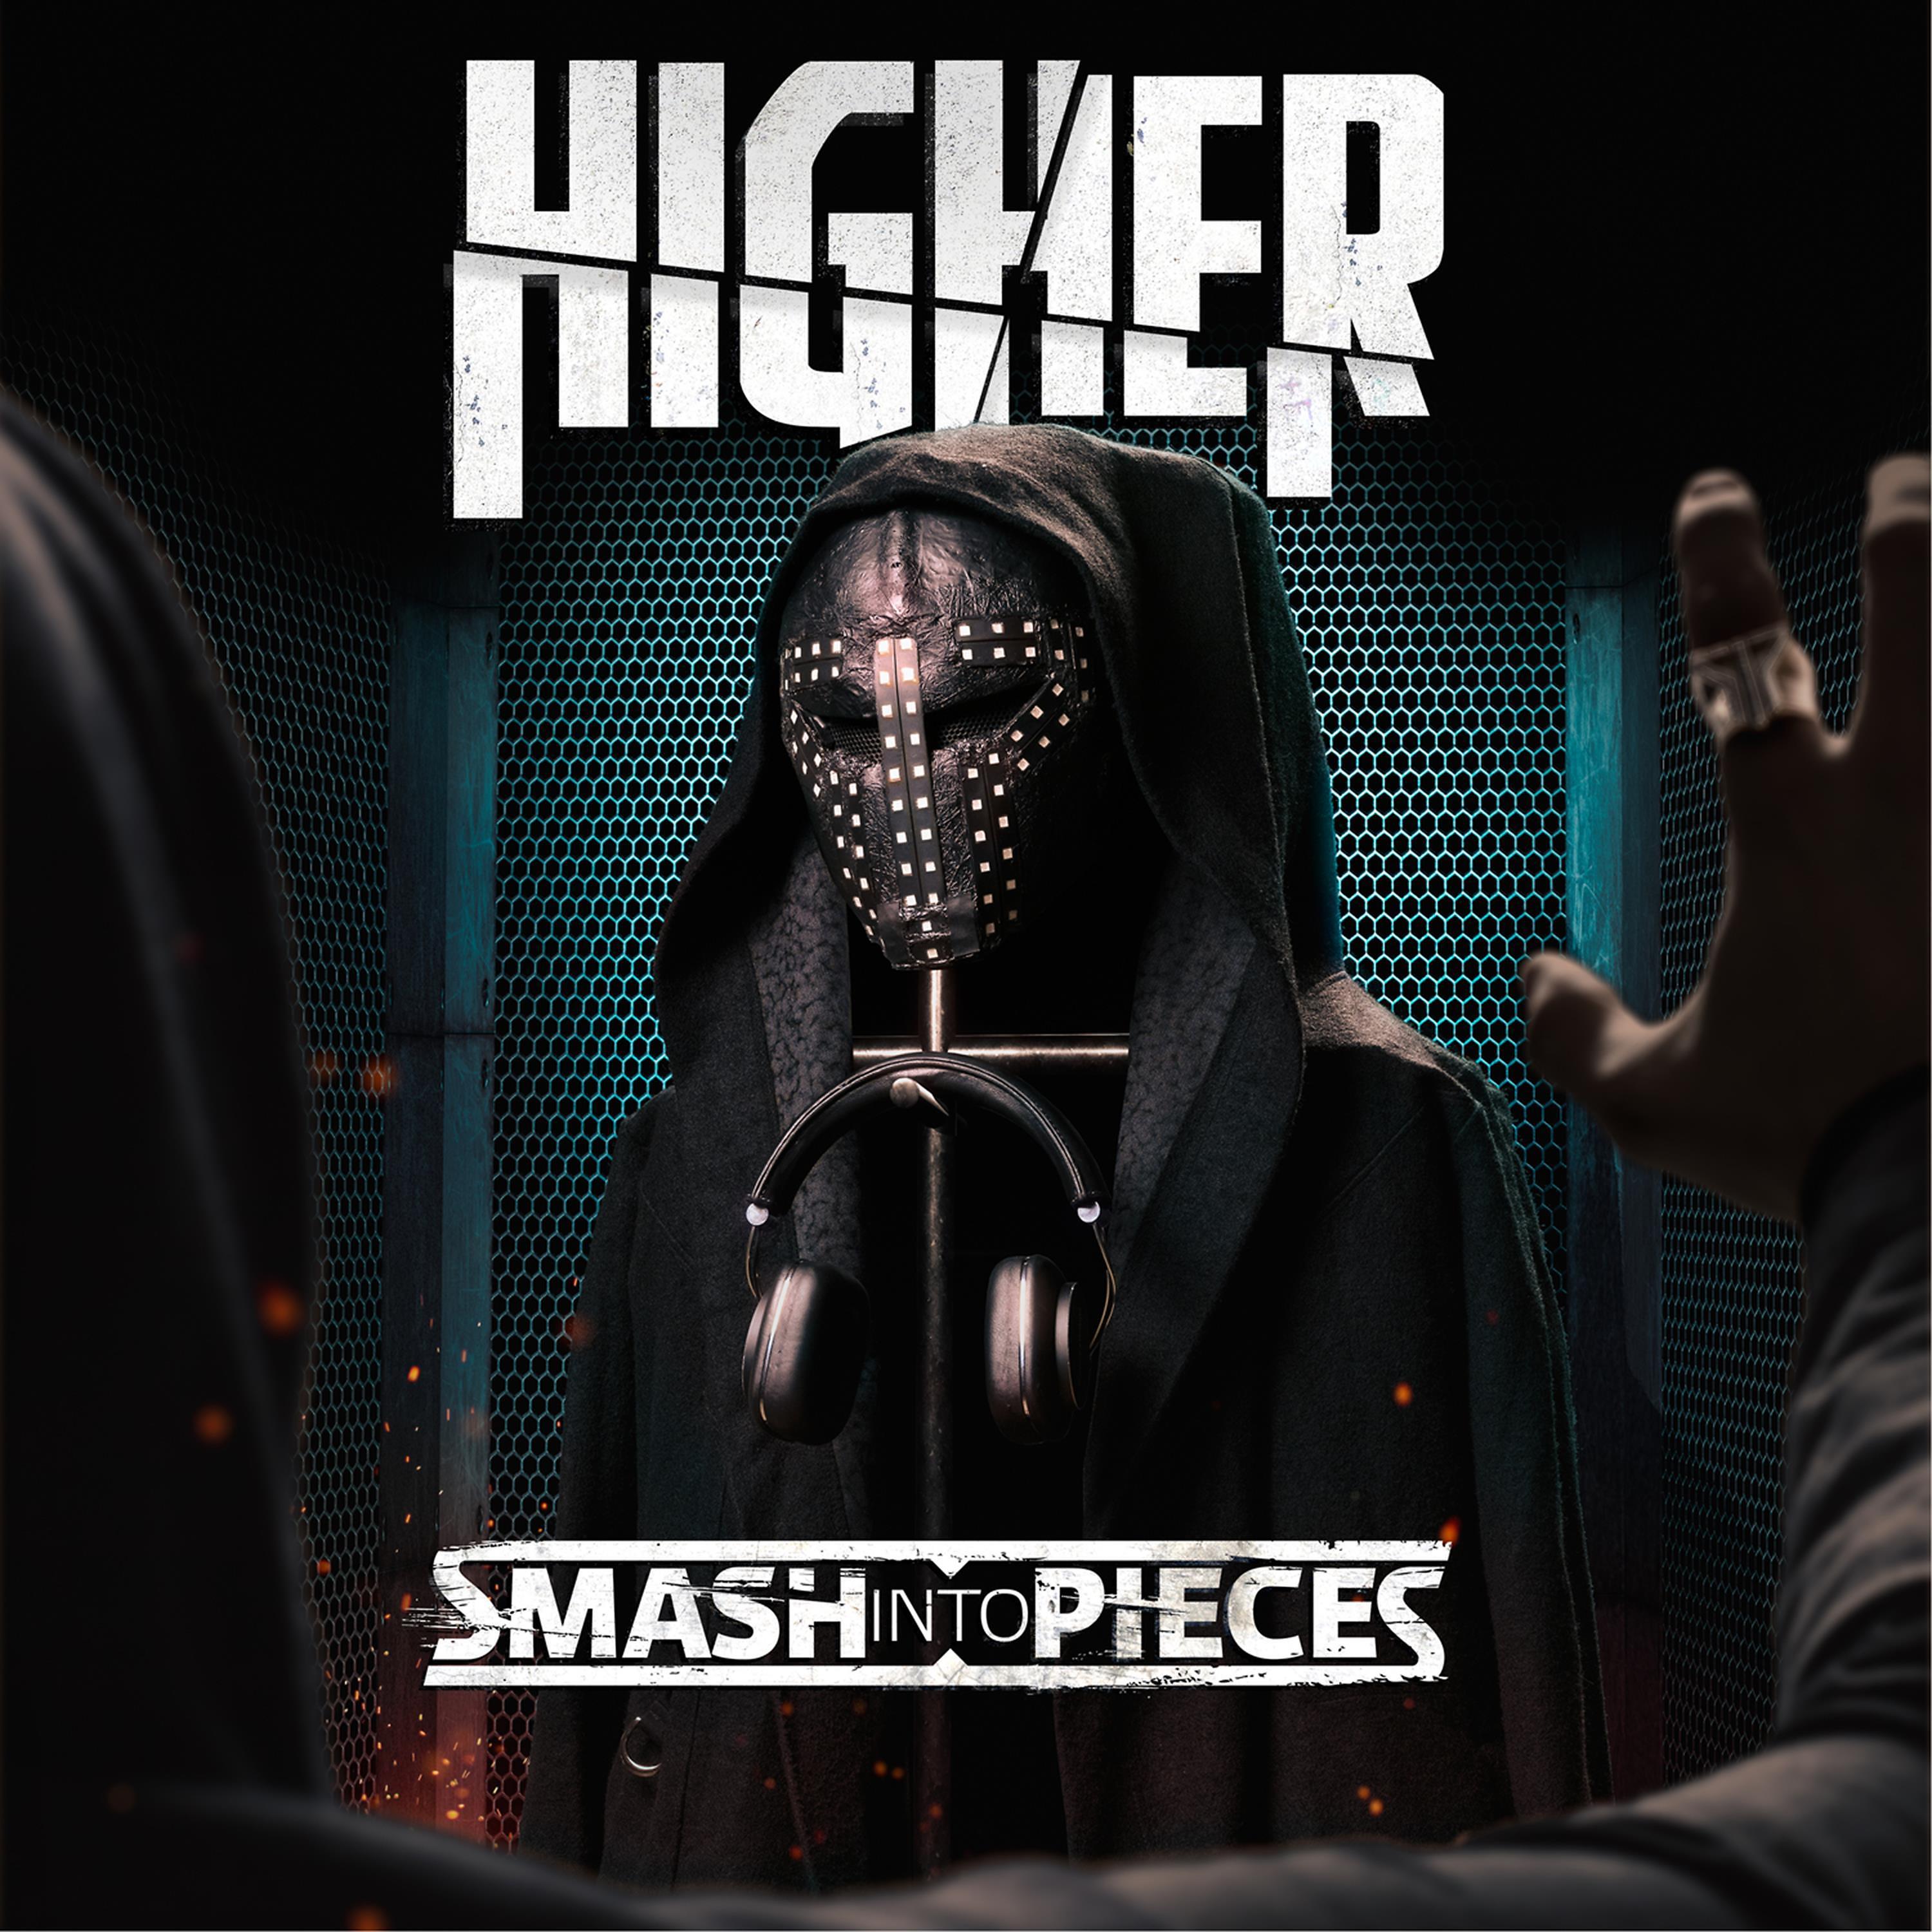 O higher and higher. Smash into pieces. Smash into pieces маска. Higher Smash into pieces обложка. Smash into pieces логотип.